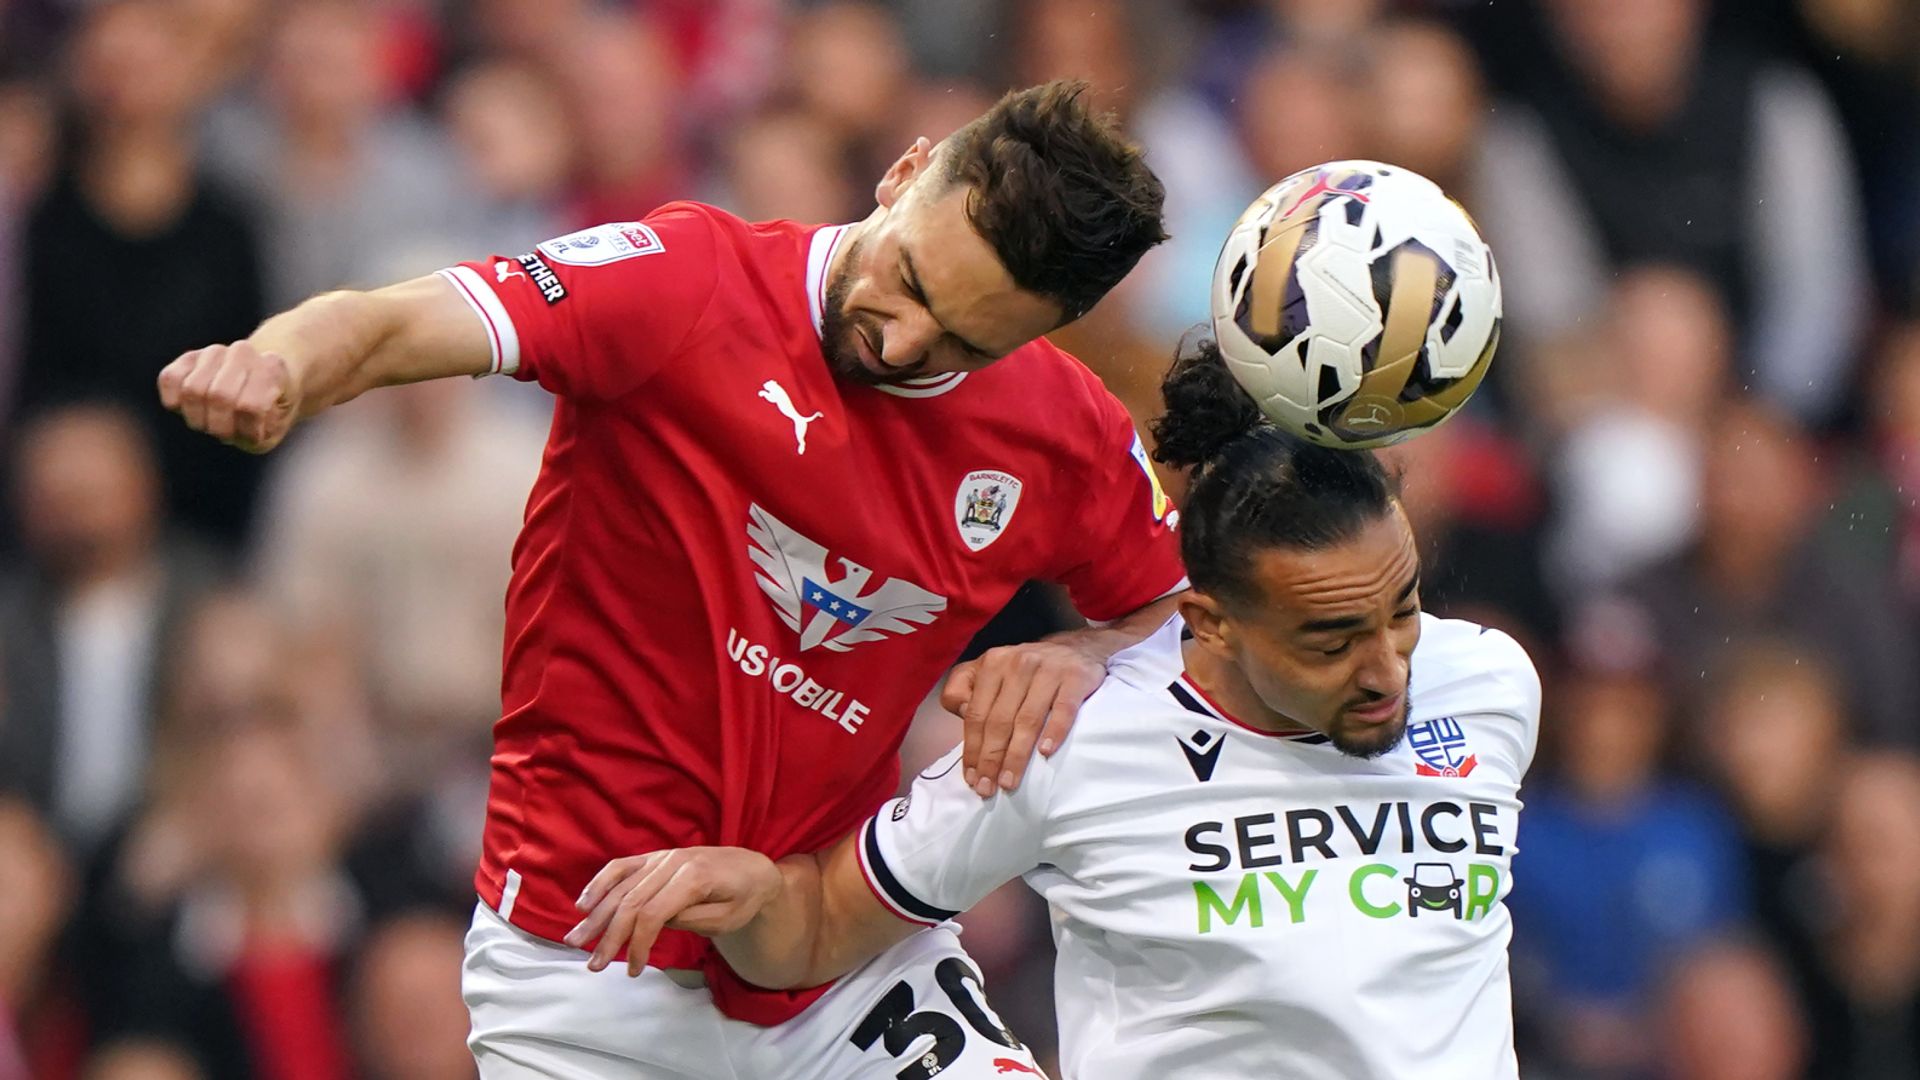 Barnsley edge Bolton to reach play-off final highlights